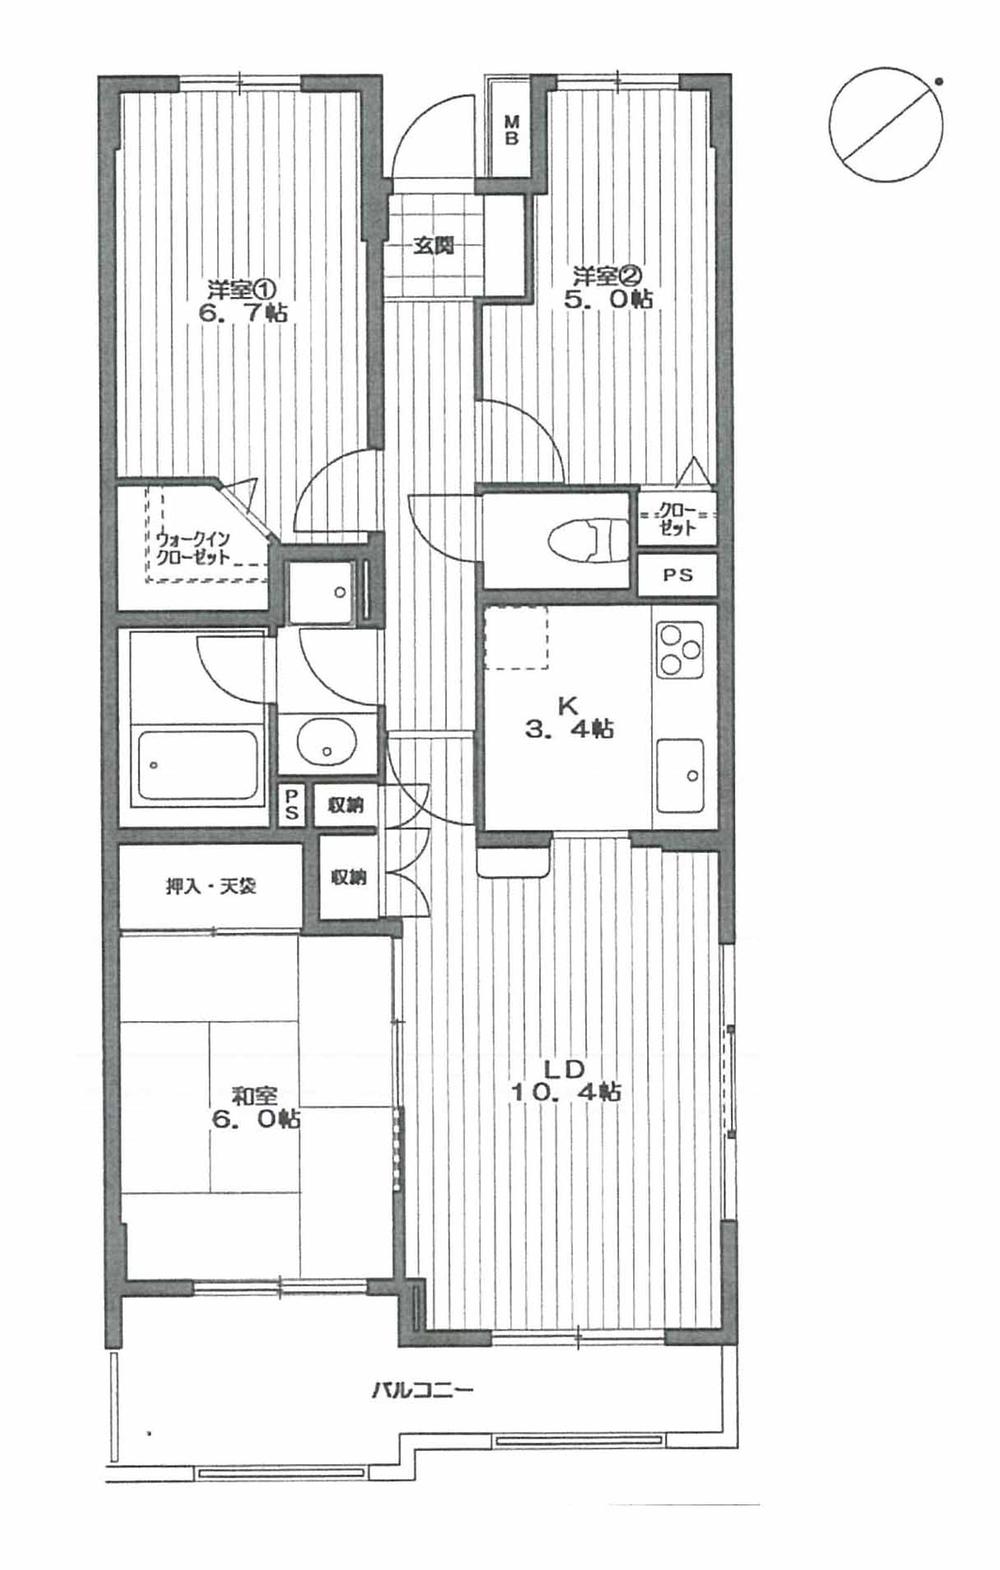 Floor plan. 3LDK, Price 33,990,000 yen, Occupied area 70.52 sq m , Balcony area 8.24 sq m